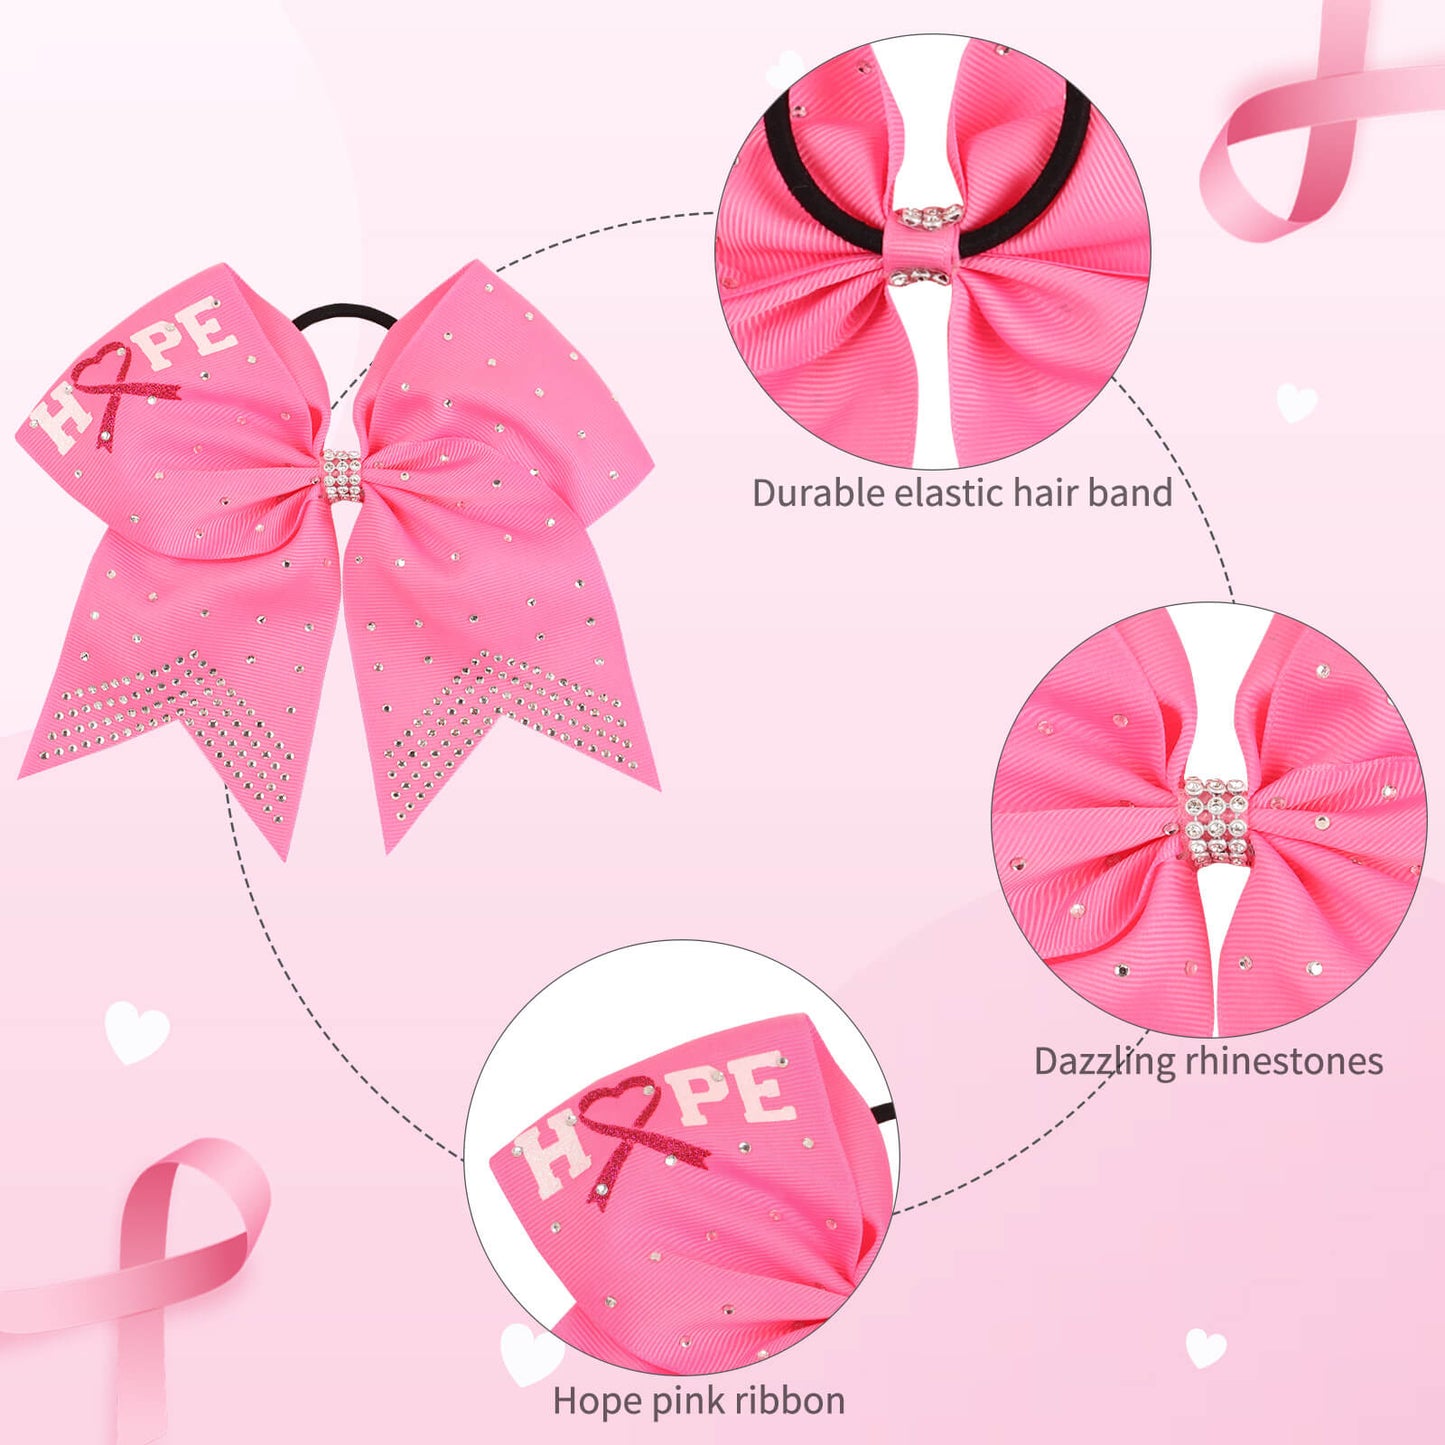 cnhairaccessories Breast Cancer Awareness Cheer Bow Glitter Hair Tie Ponytail Holder Rhinestone Pack